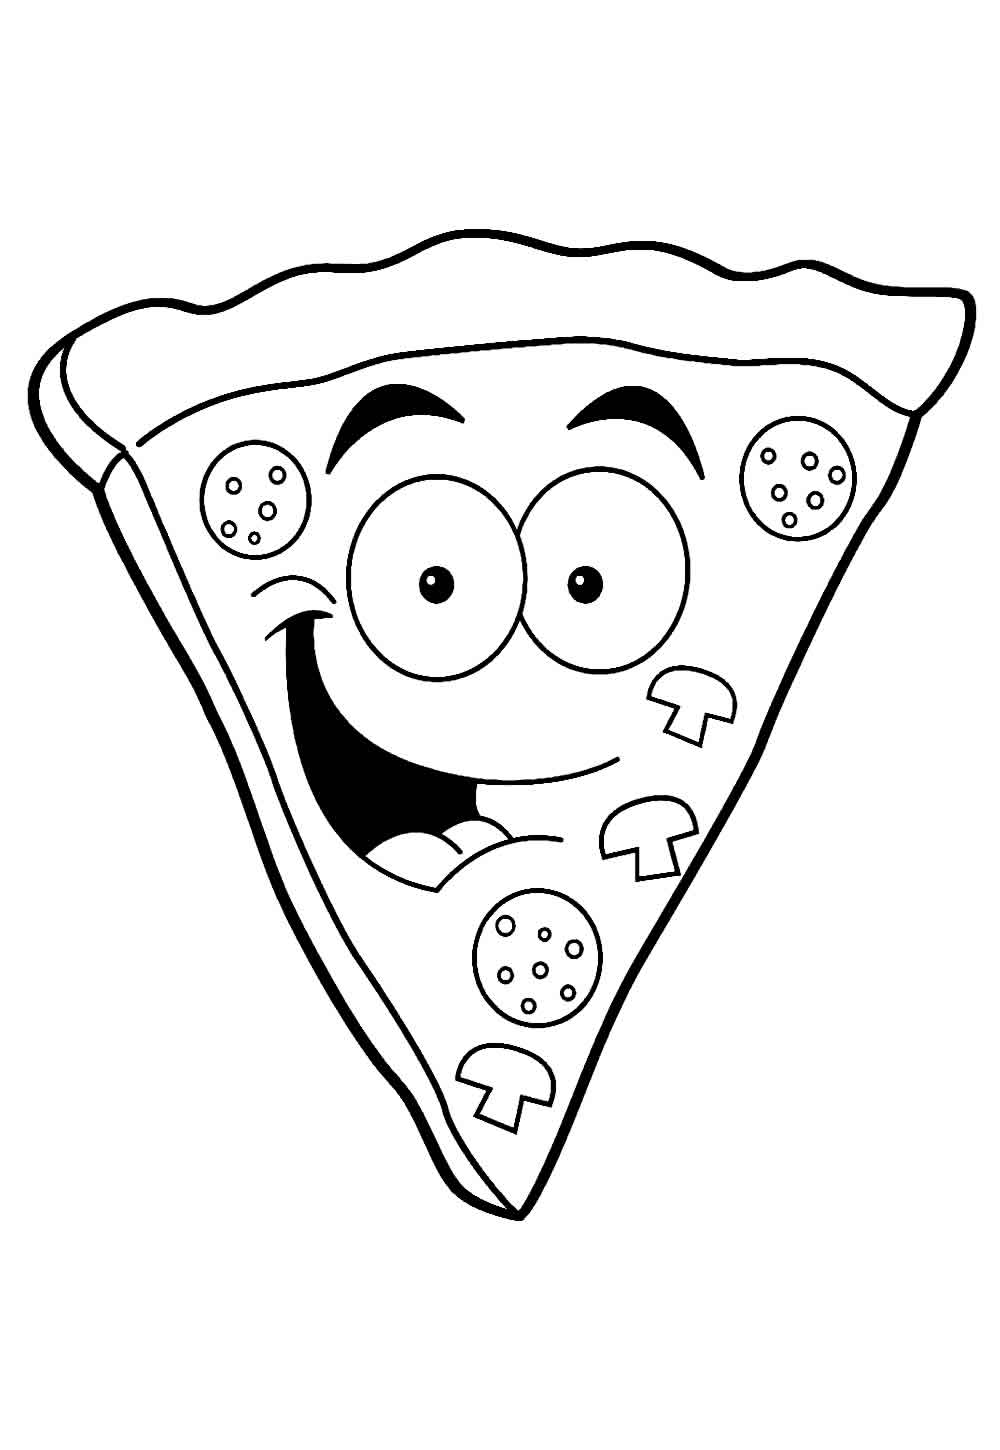 Desenho para pintar de Pizza